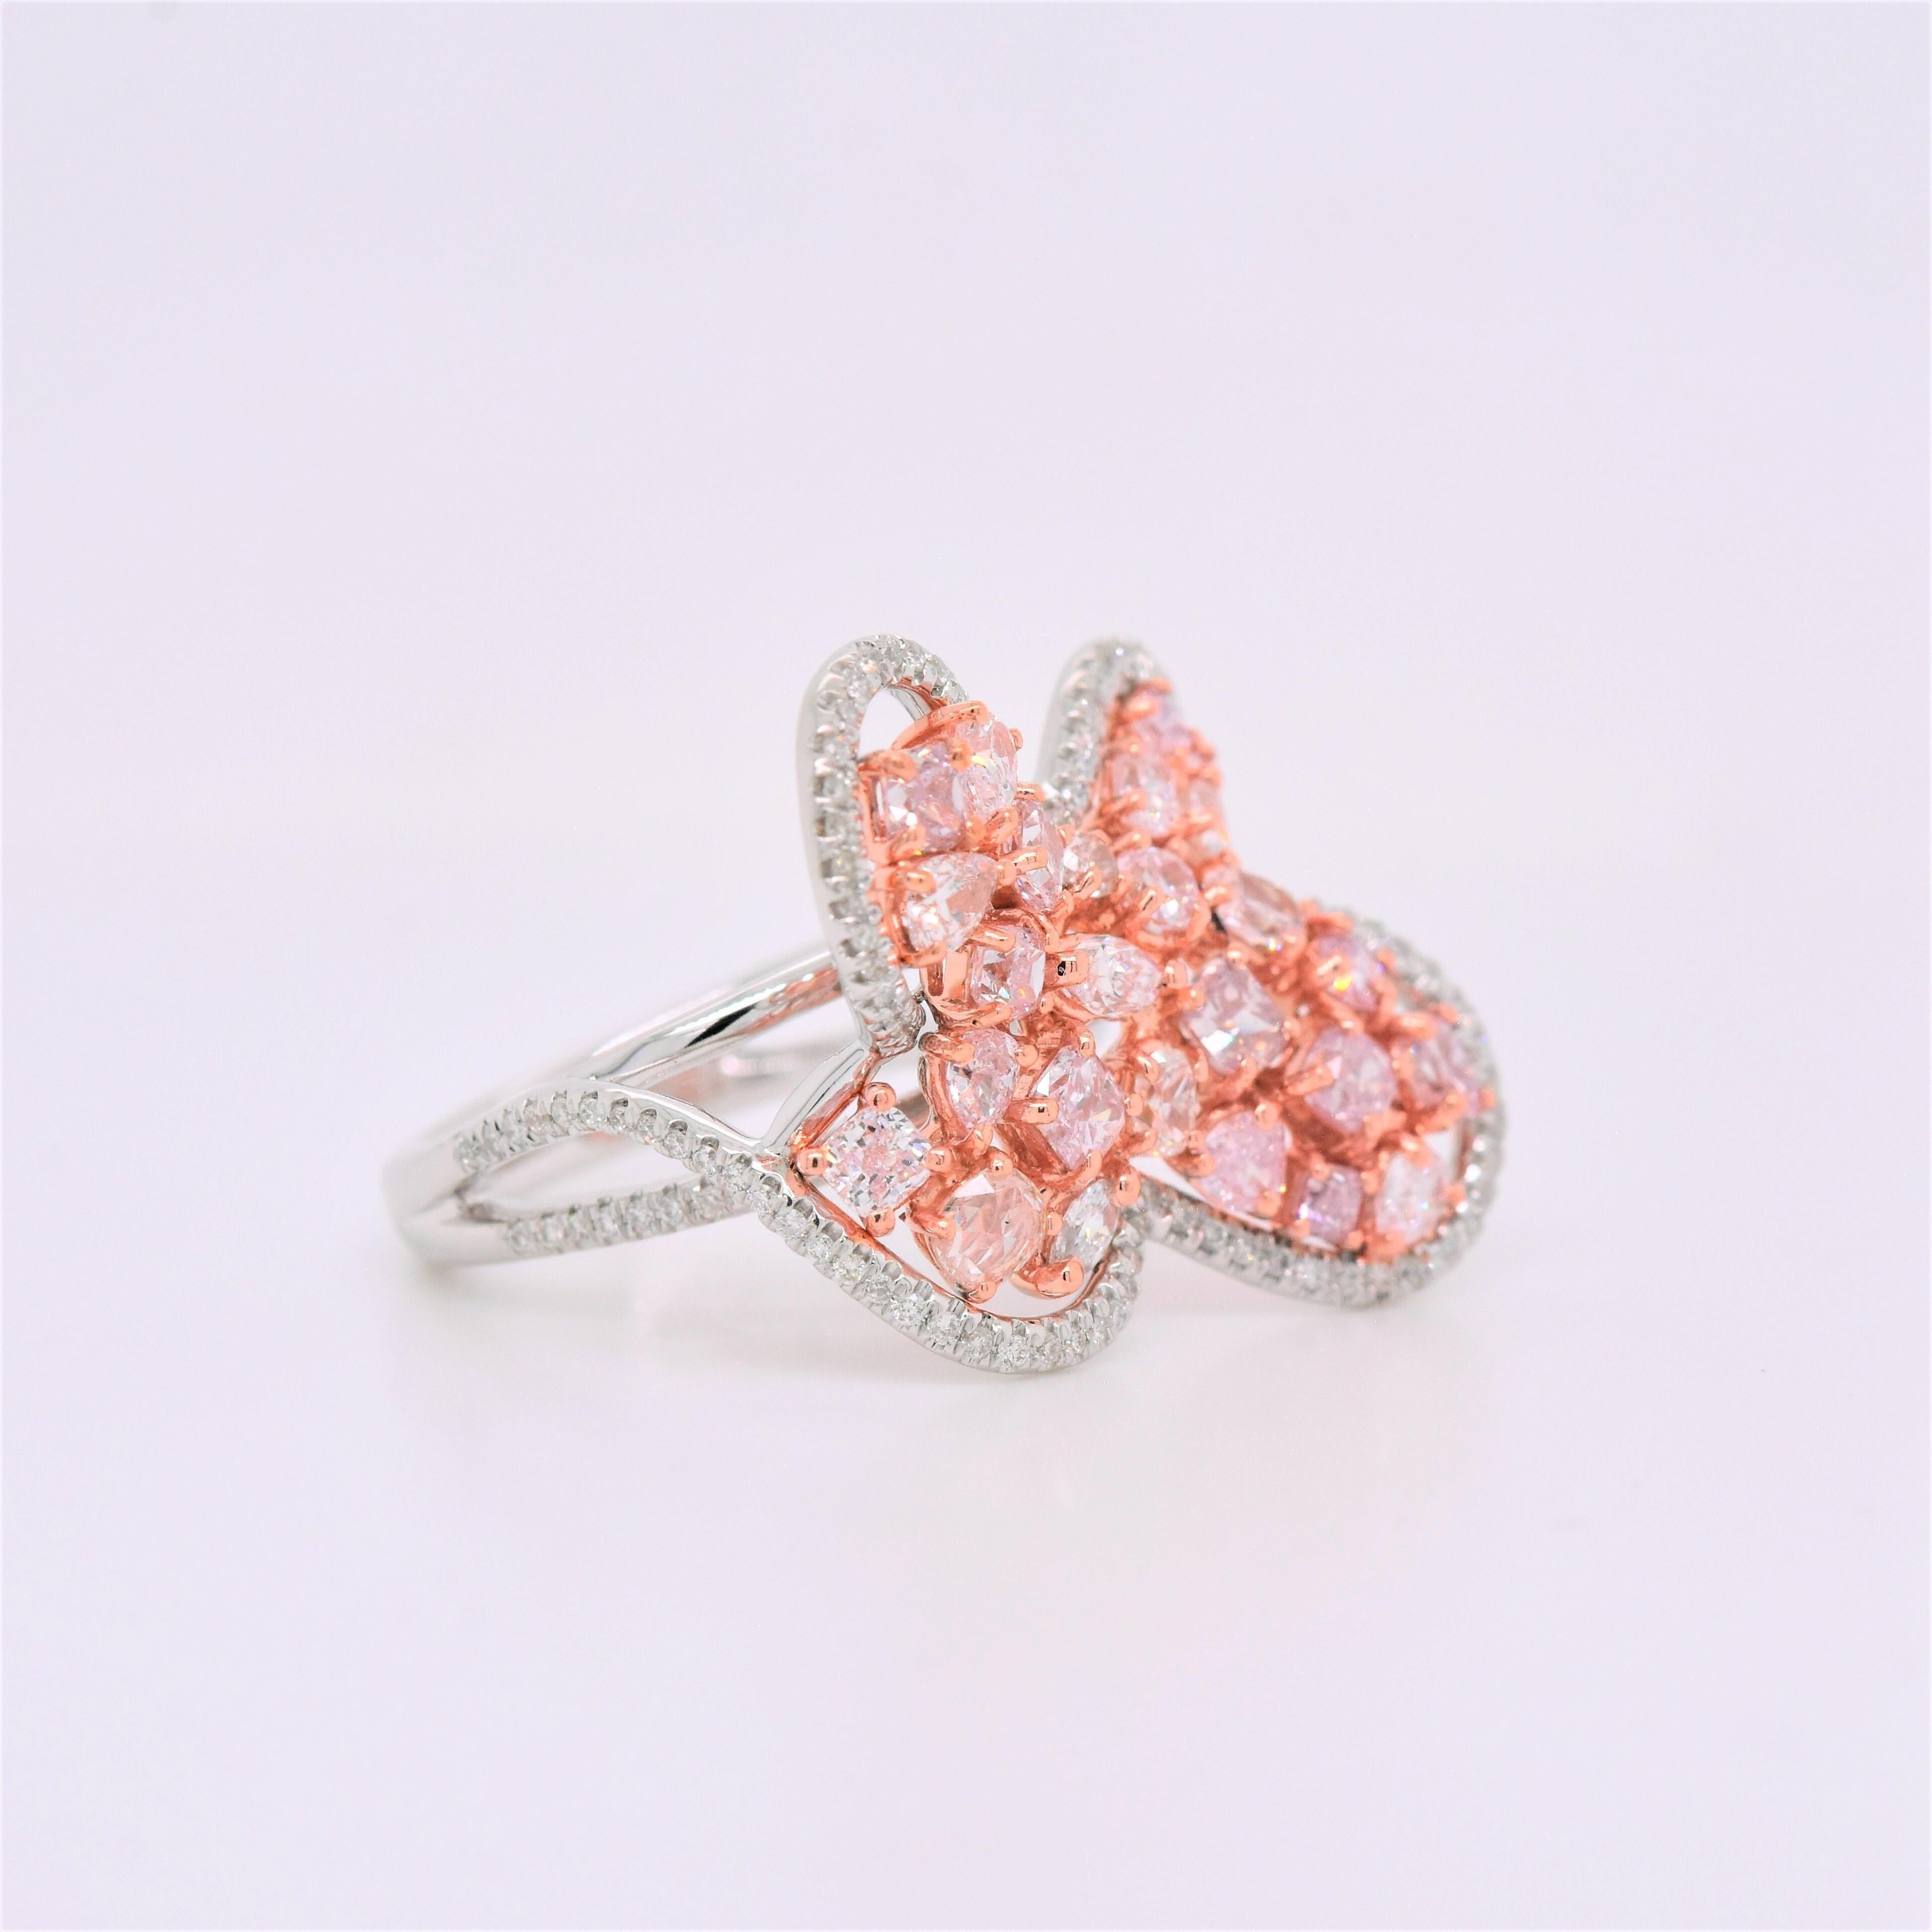 Contemporain Bague fantaisie en diamant rose de 2,70 carats 